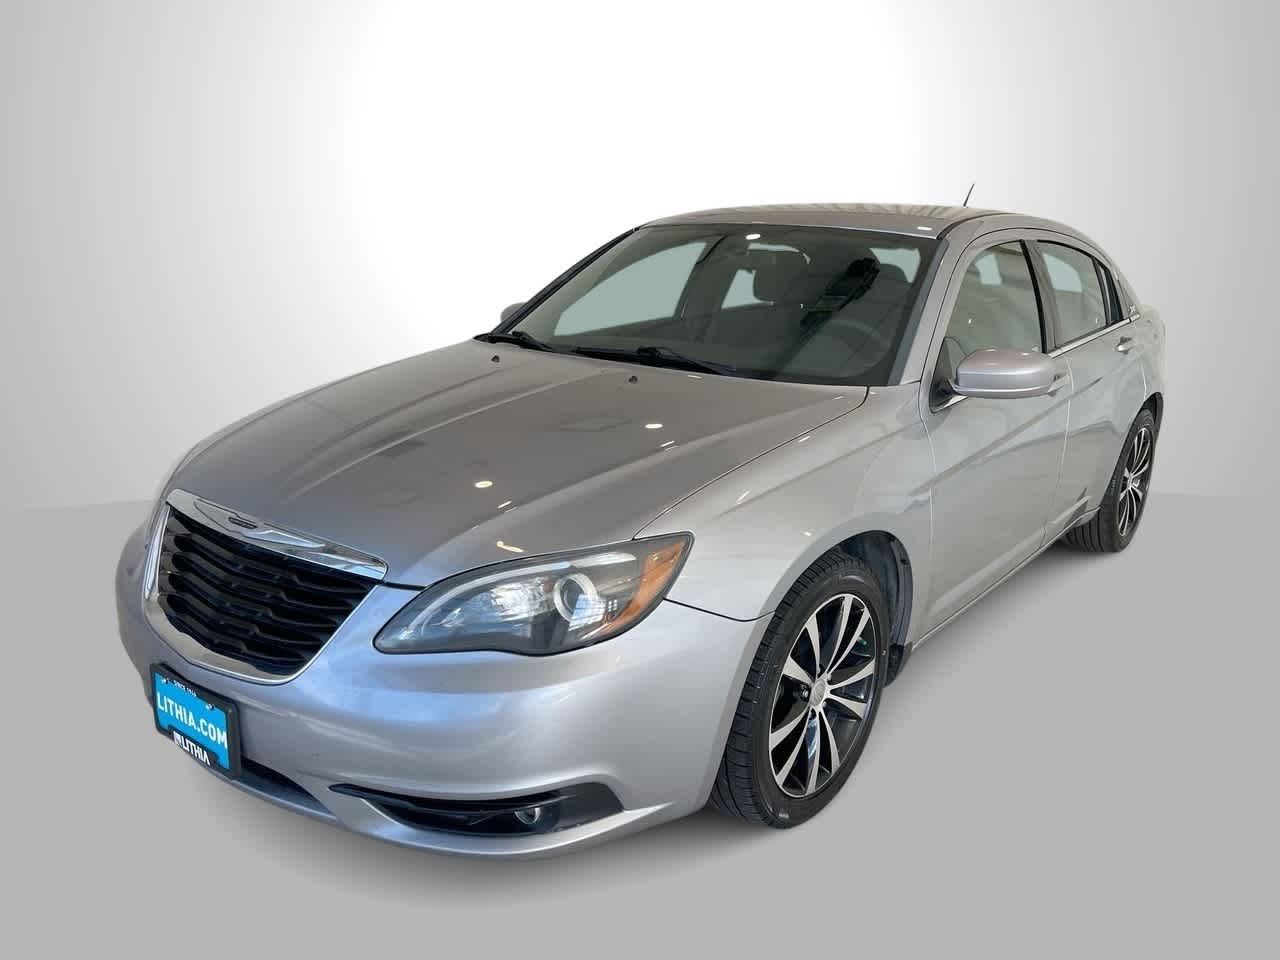 used 2014 Chrysler 200 car, priced at $6,997